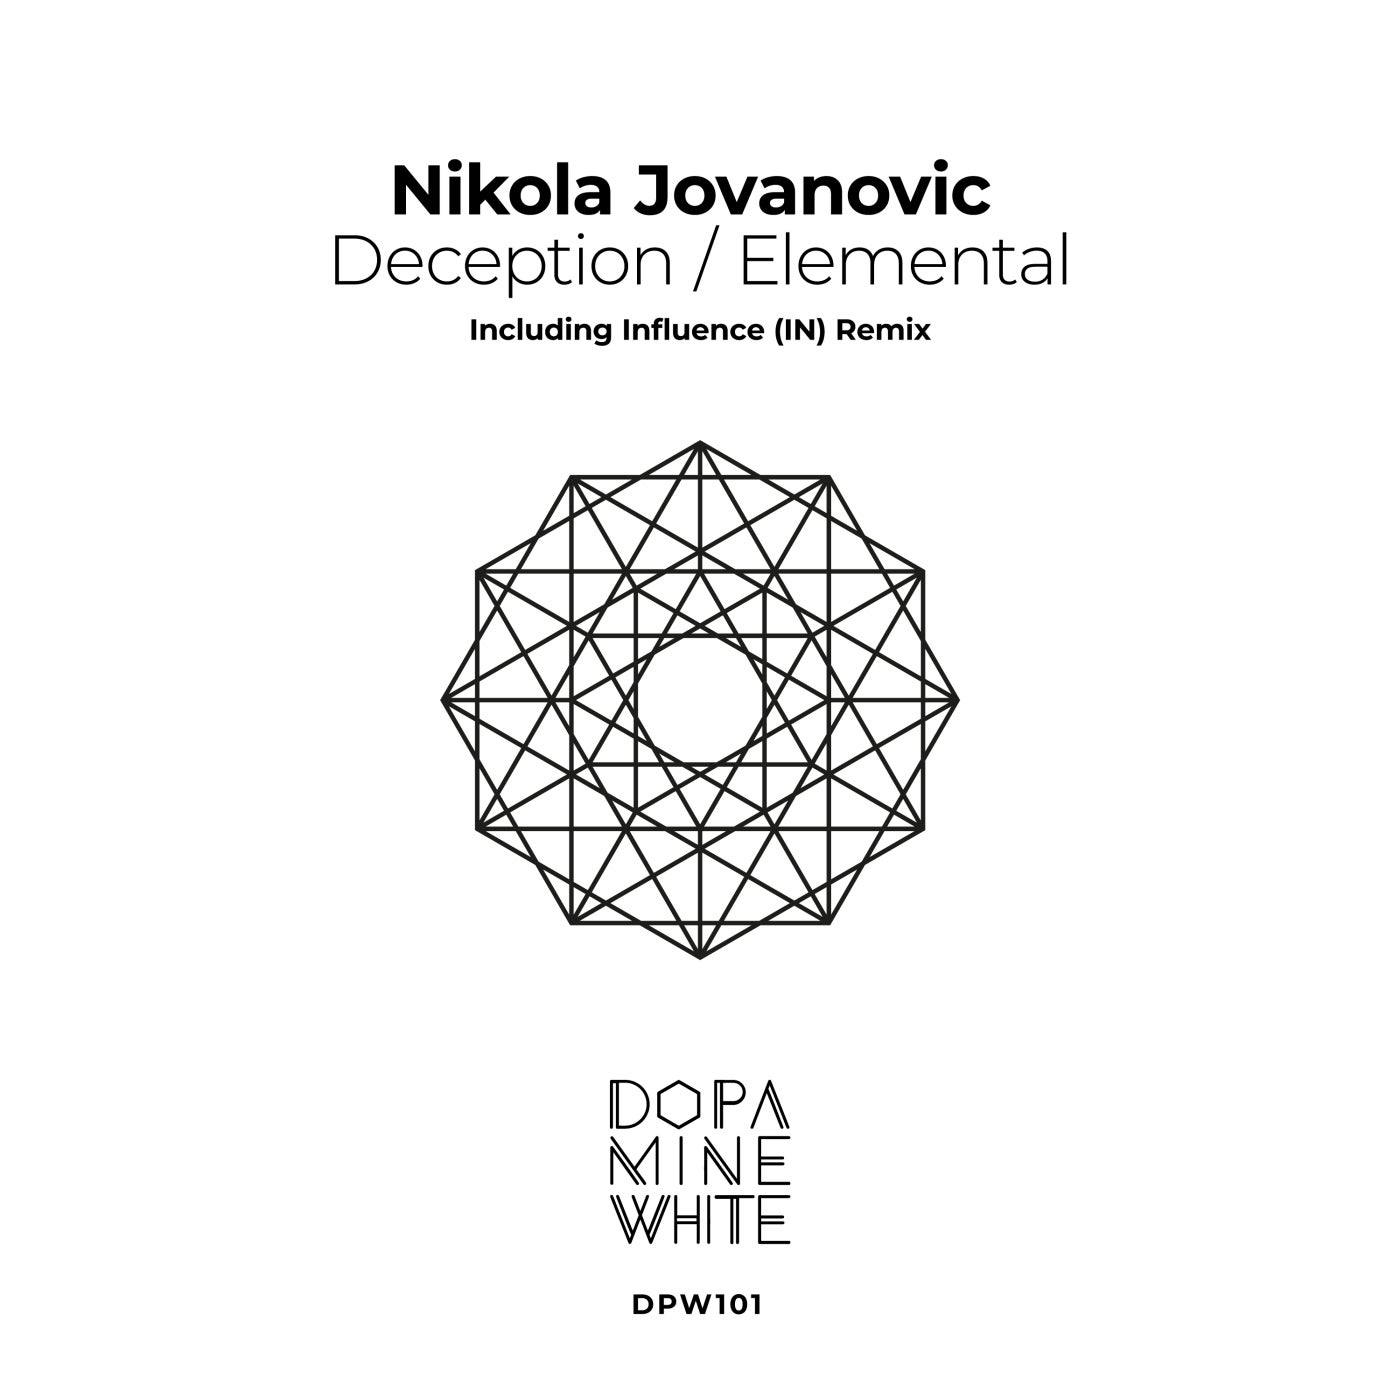 Nikola Jovanovic - Deception (Influence IN Remix)